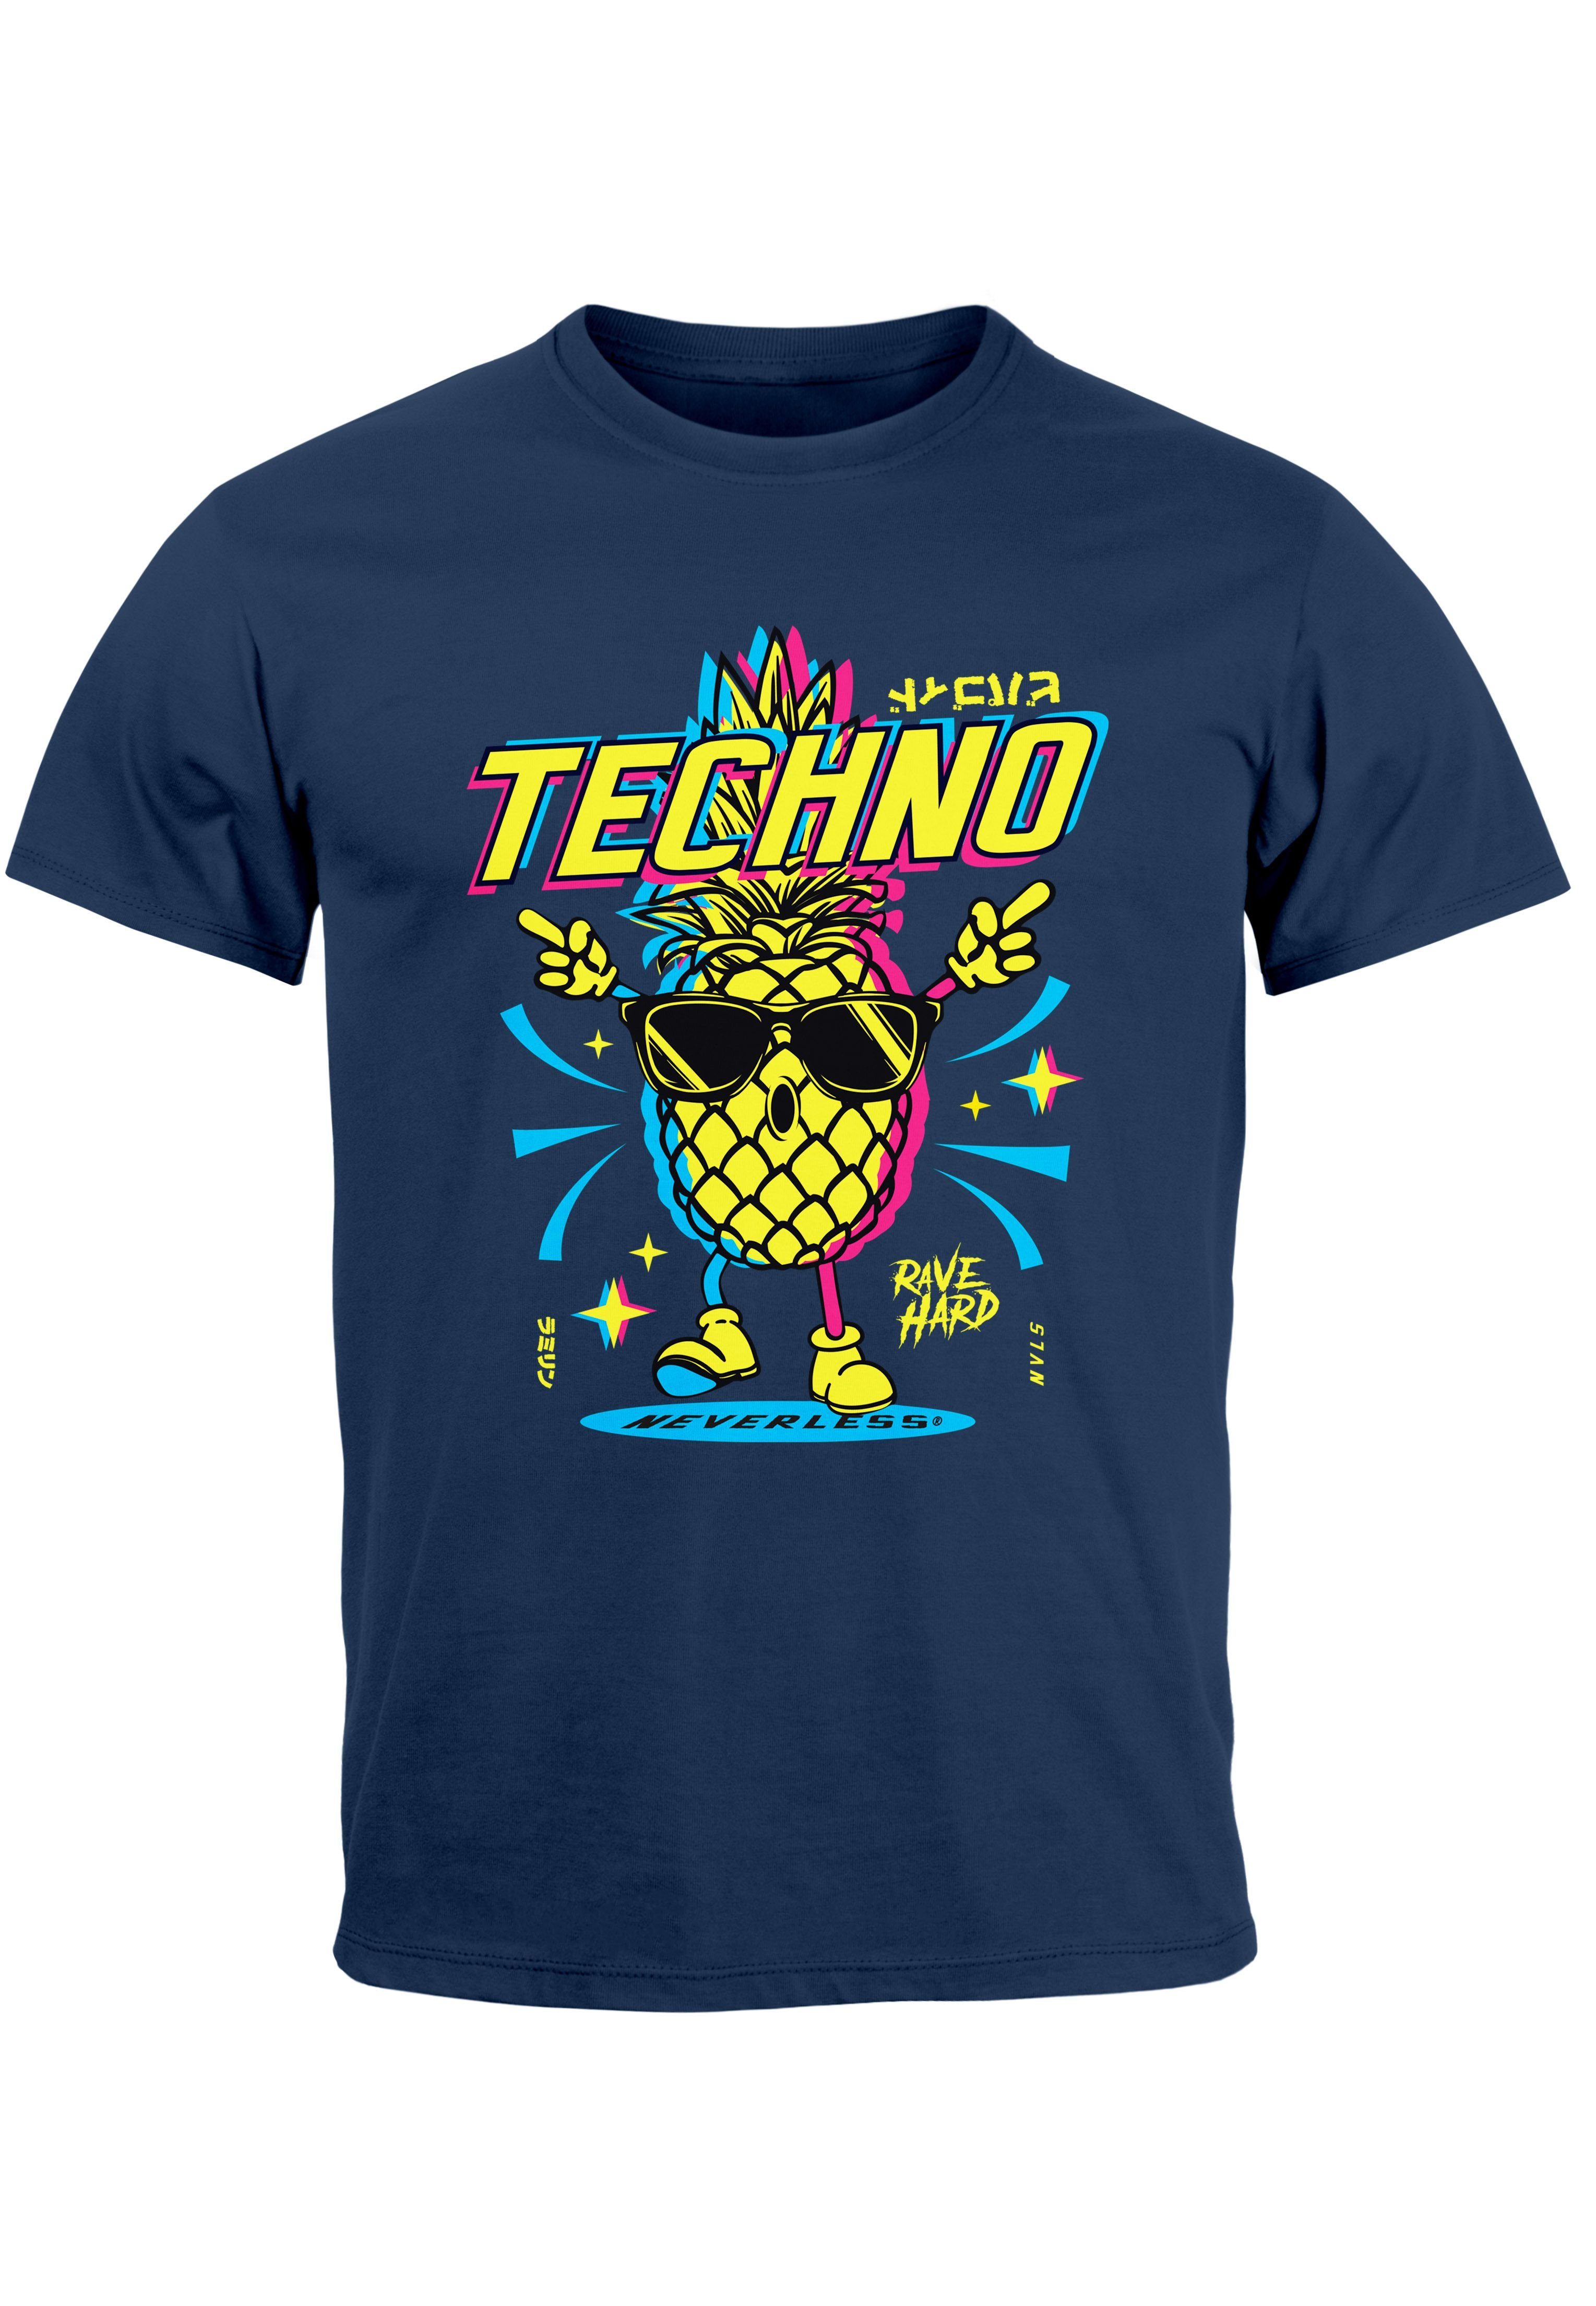 Lustig T-Shirt Shirt Techno mit Neverless Herren Tanzen Printshirt Party Rave Ananas navy Print Print-Shirt